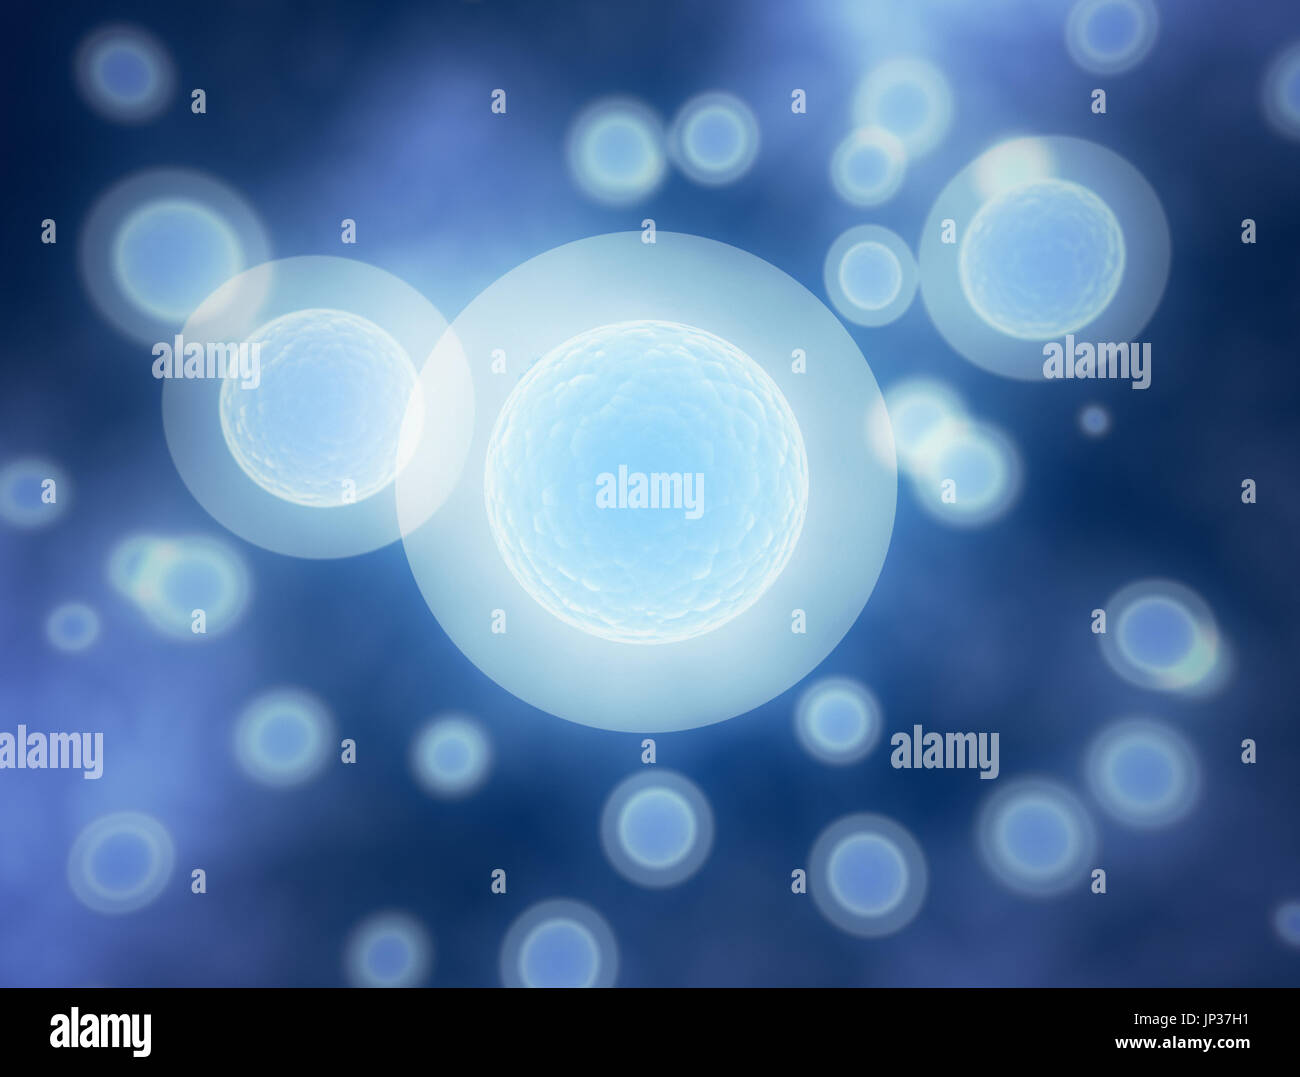 Egg cells science illustration Stock Photo